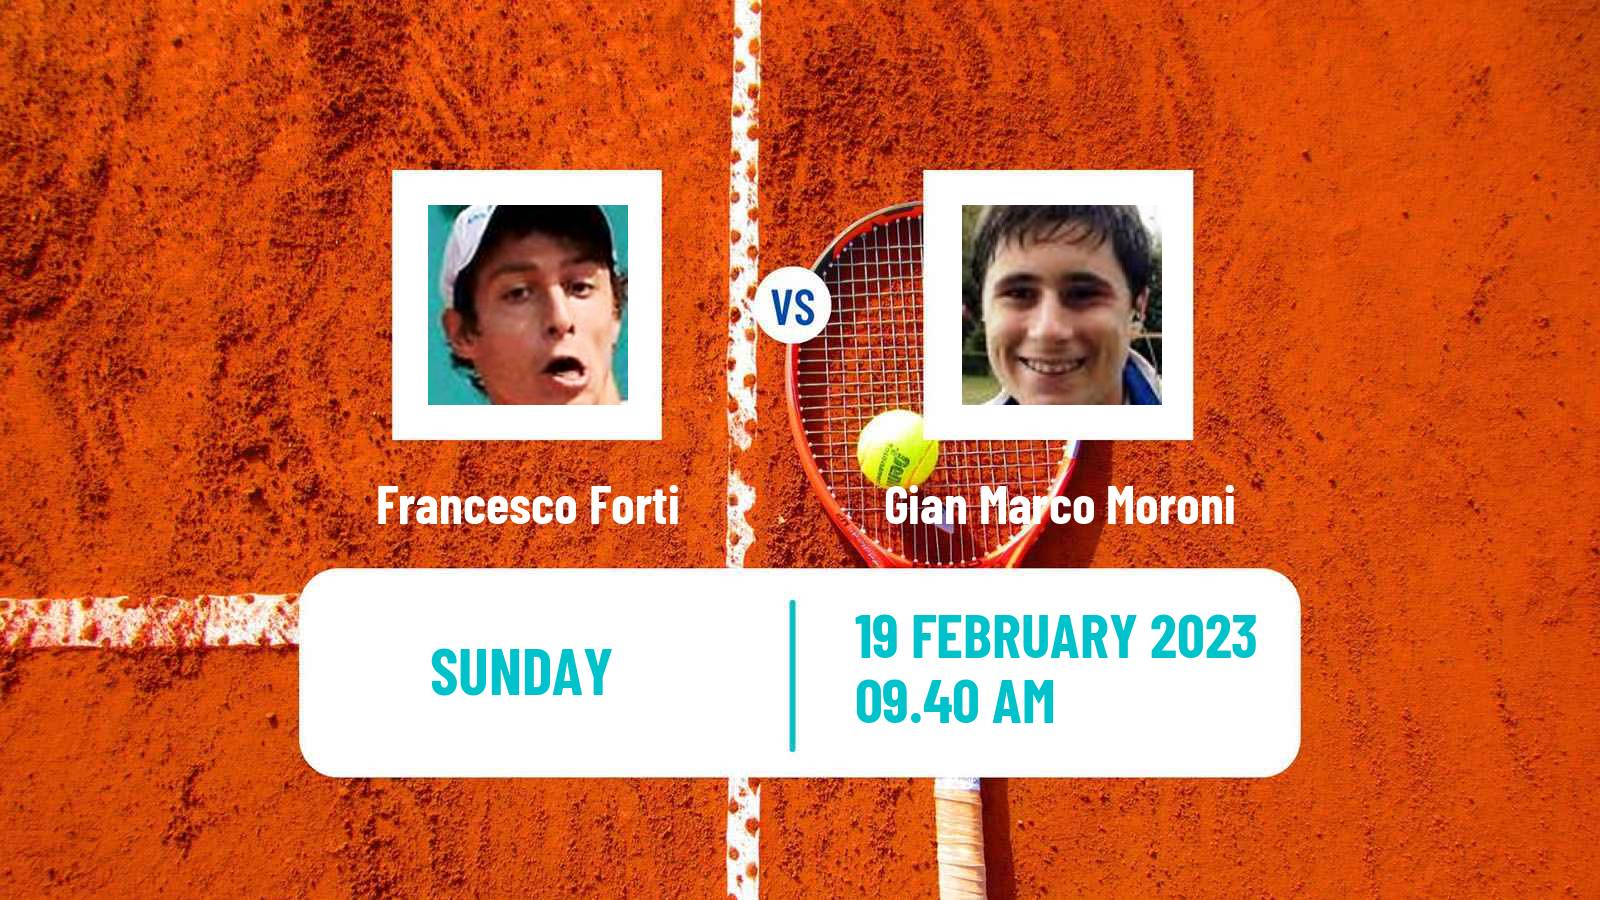 Tennis ATP Challenger Francesco Forti - Gian Marco Moroni